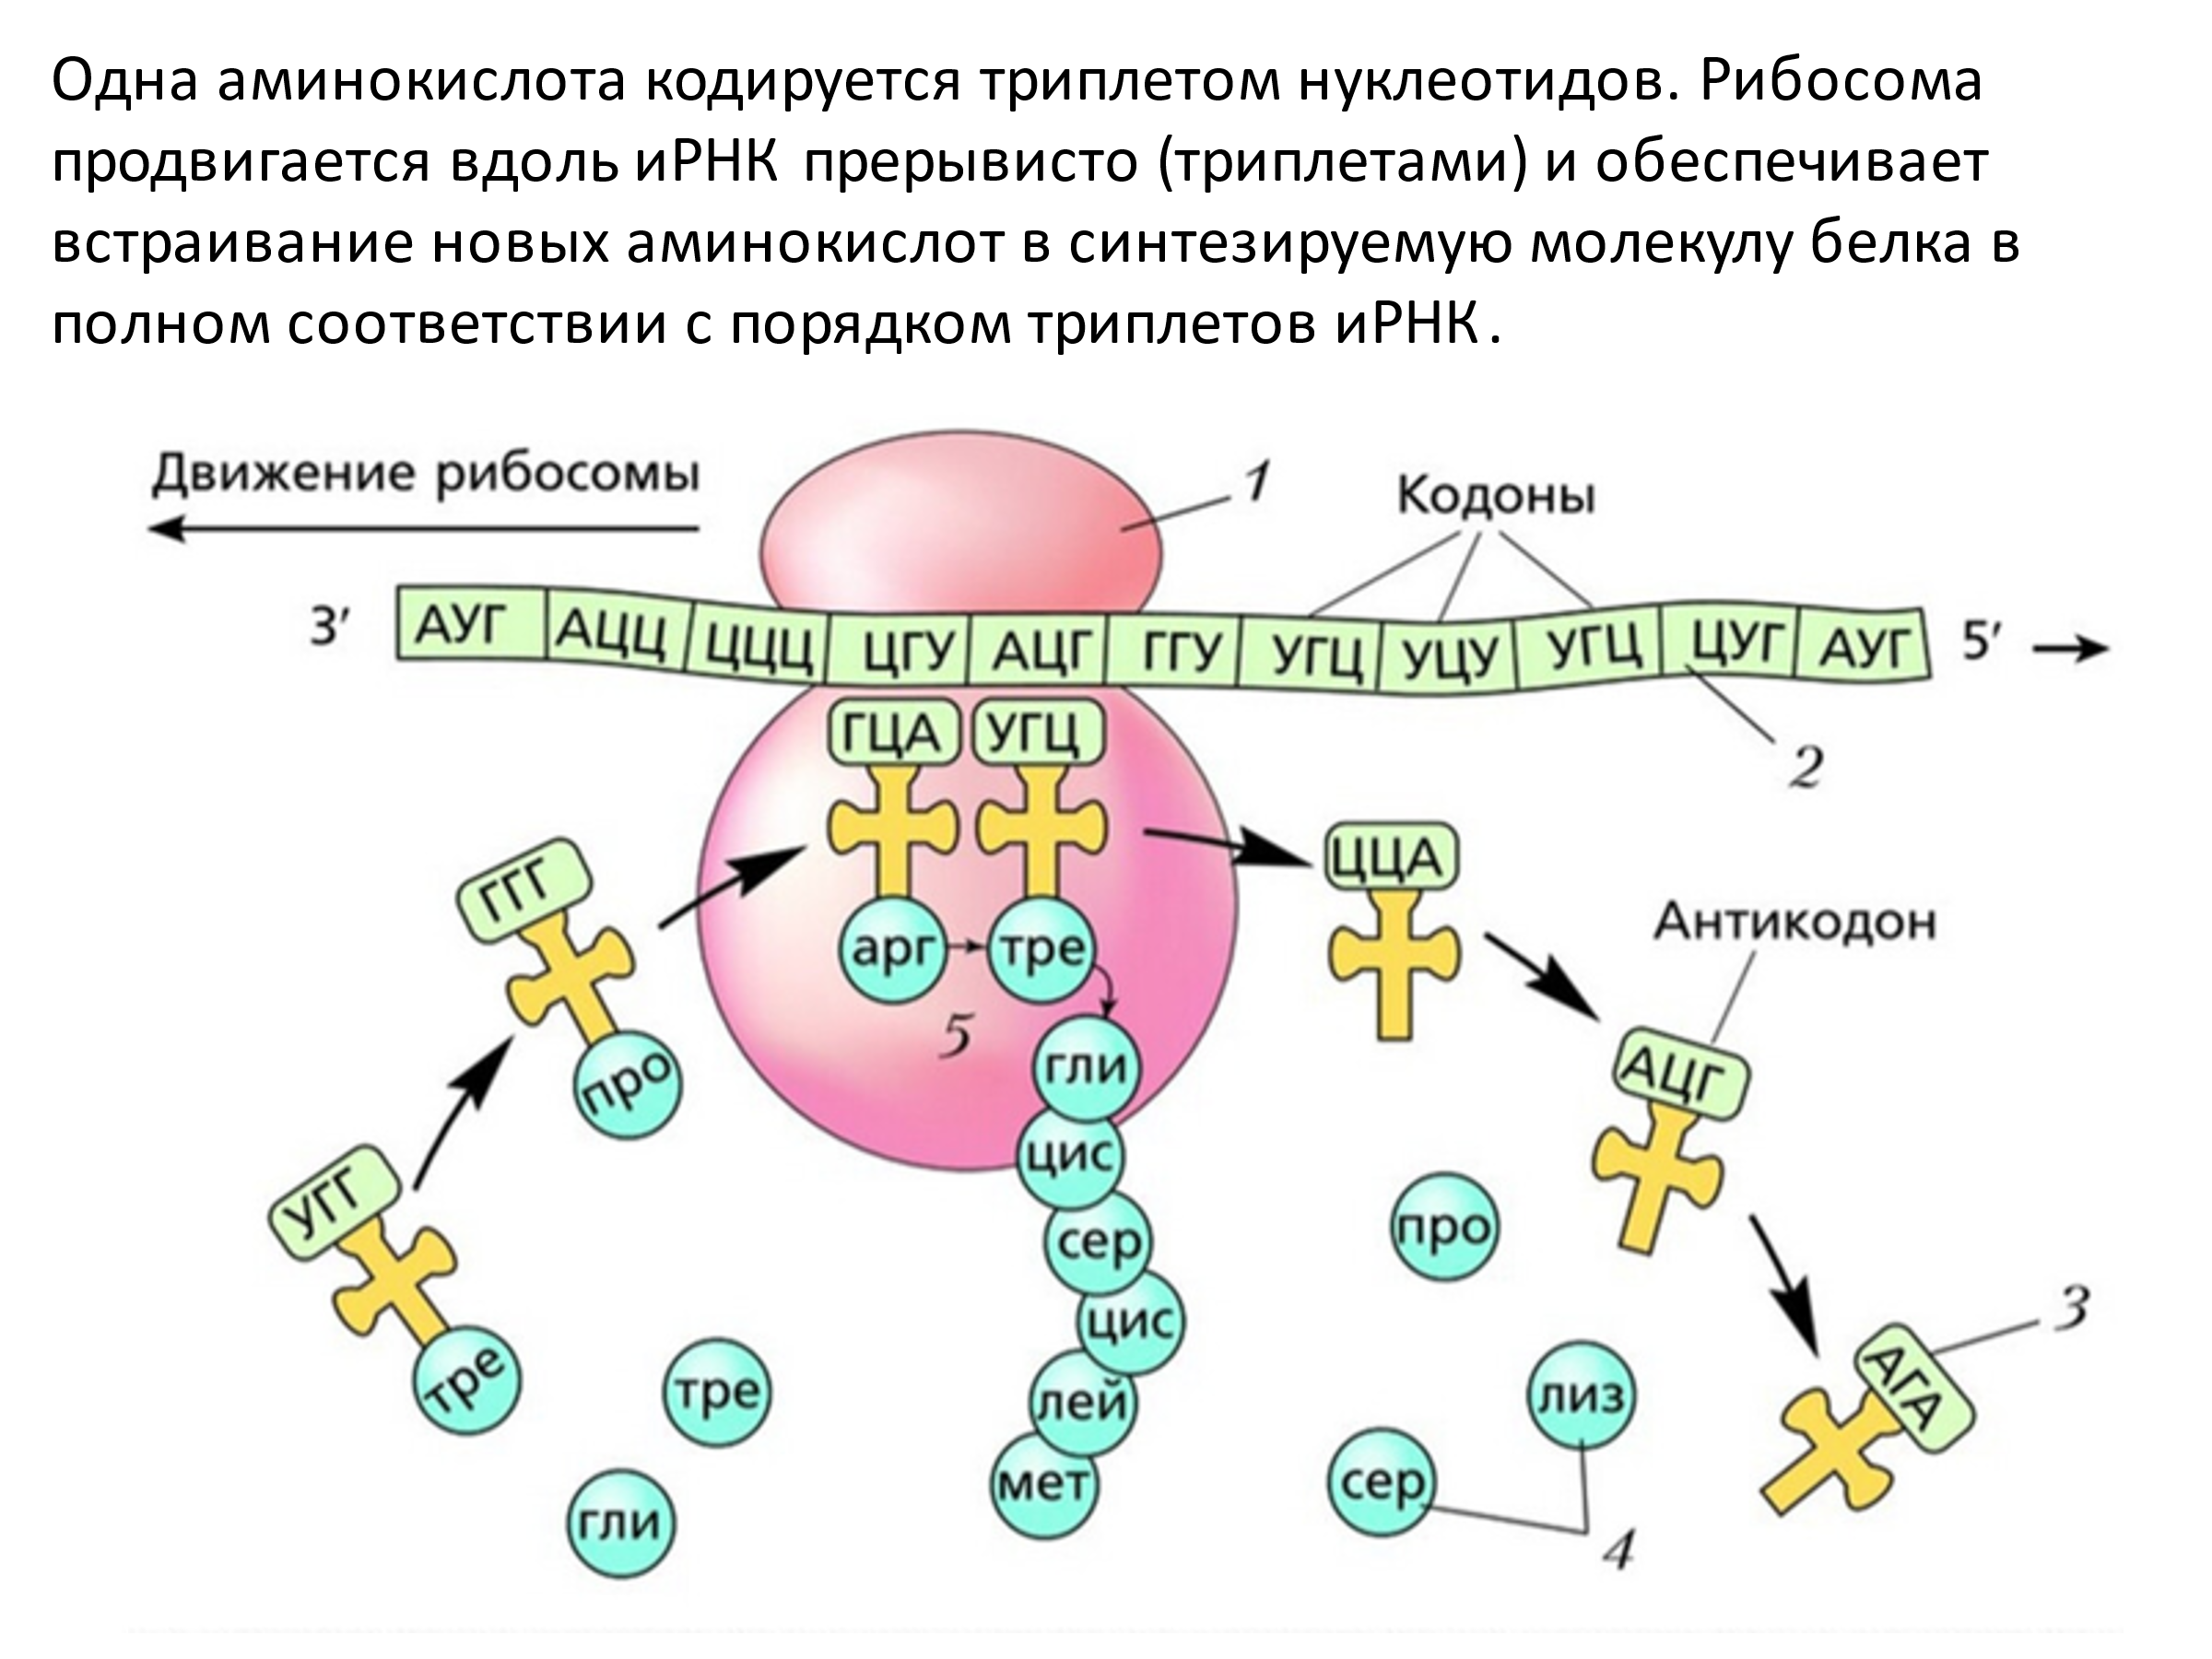 Синтез полипептида происходит. Трансляция Биосинтез схема. Процесс синтеза белка на рибосоме схема. Схема синтеза белка в рибосоме трансляция. Схема синтеза белка в рибосоме.